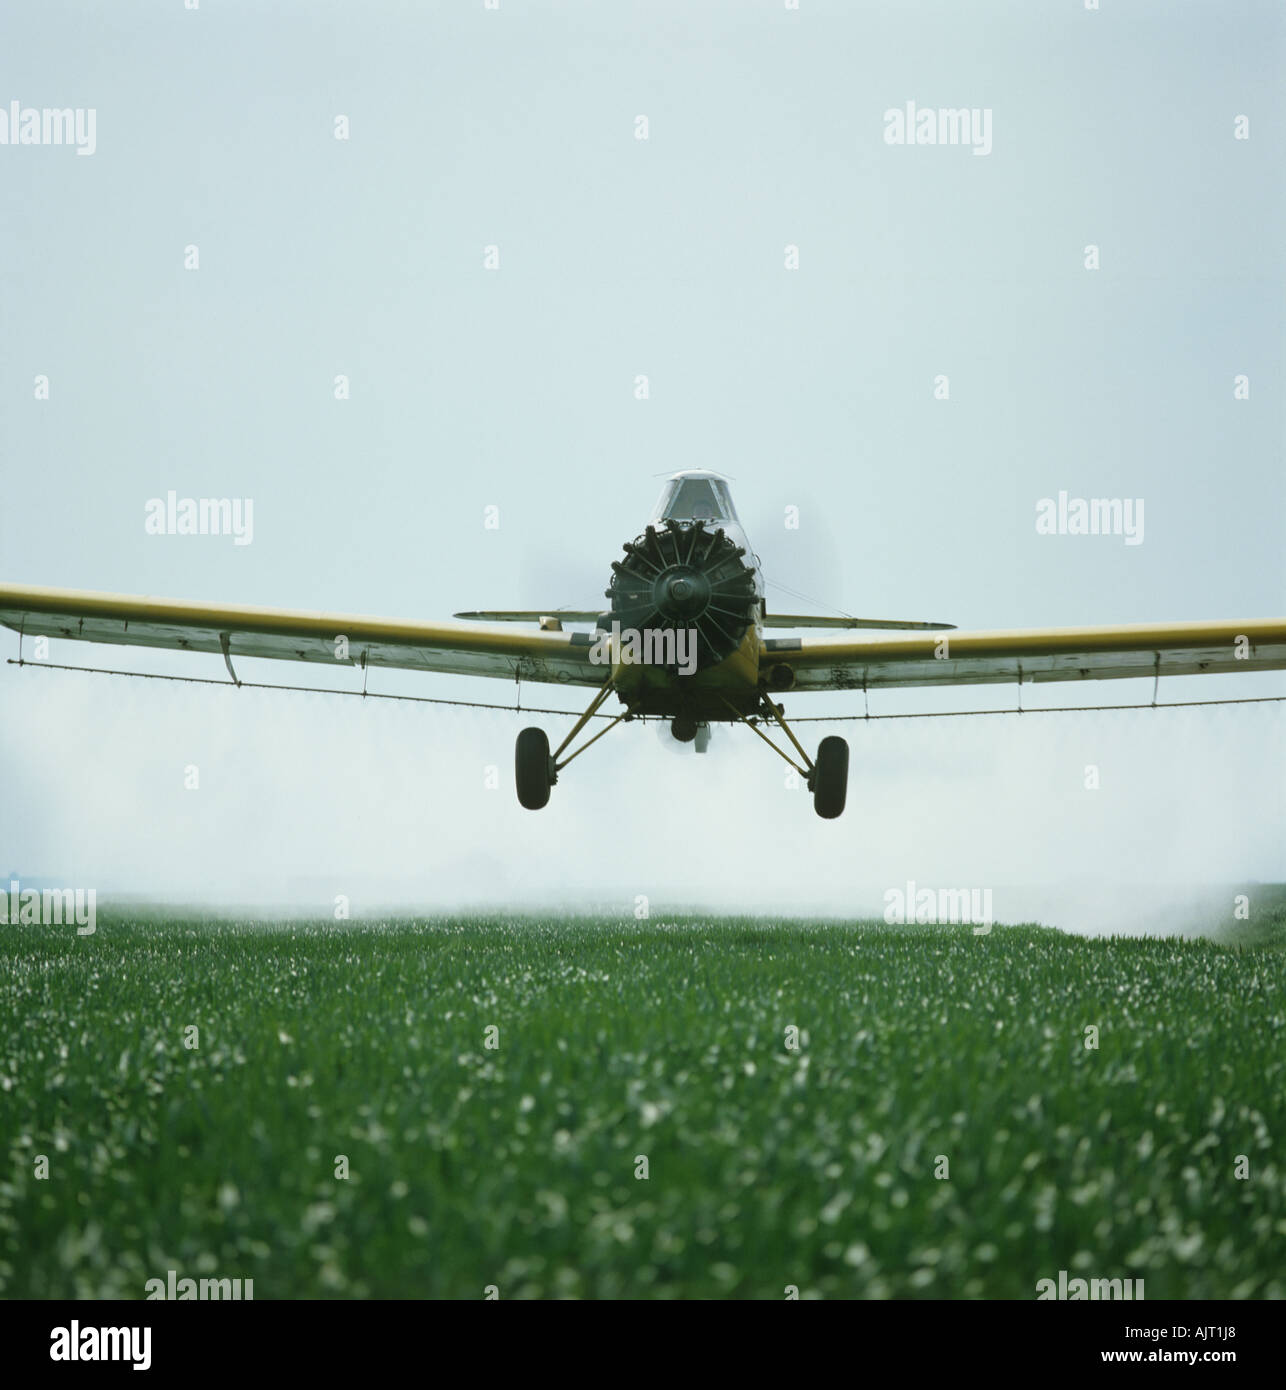 Soor Commander Flugzeuge sprühen junge Weizenernte im Norden Kent Marsh Ackerland Stockfoto